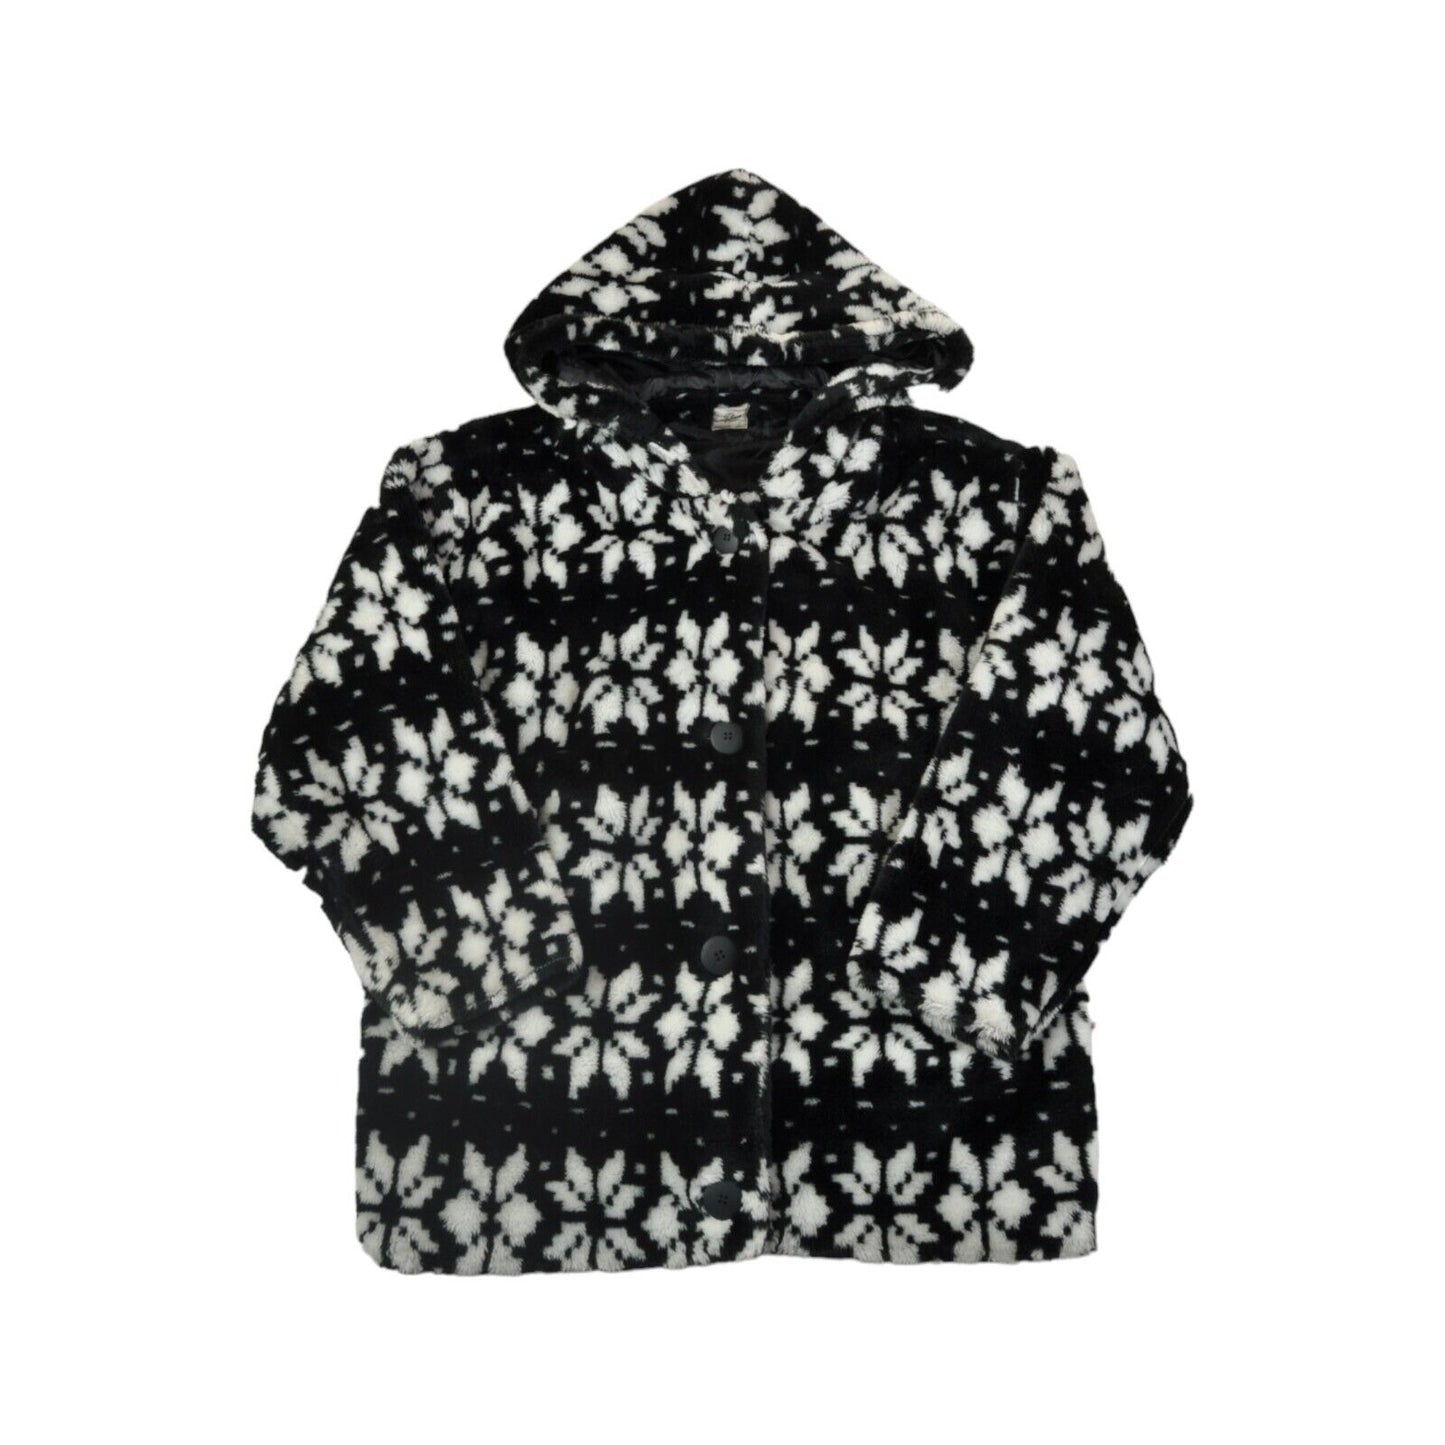 Vintage Fleece Hooded Jacket Retro Snowflake Pattern Black/White Ladies Large